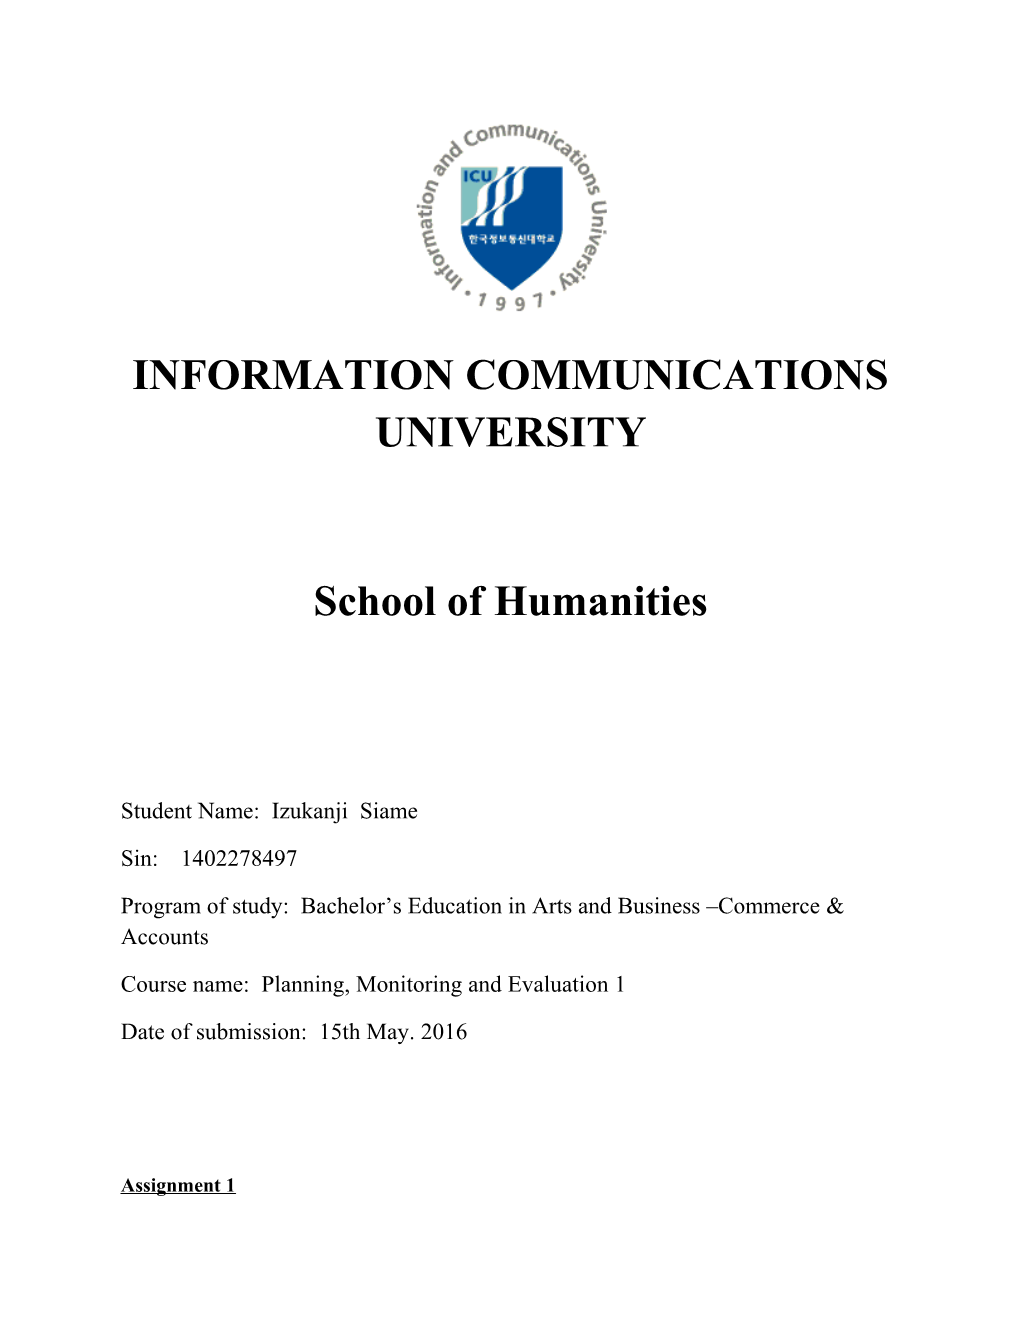 Information Communications University